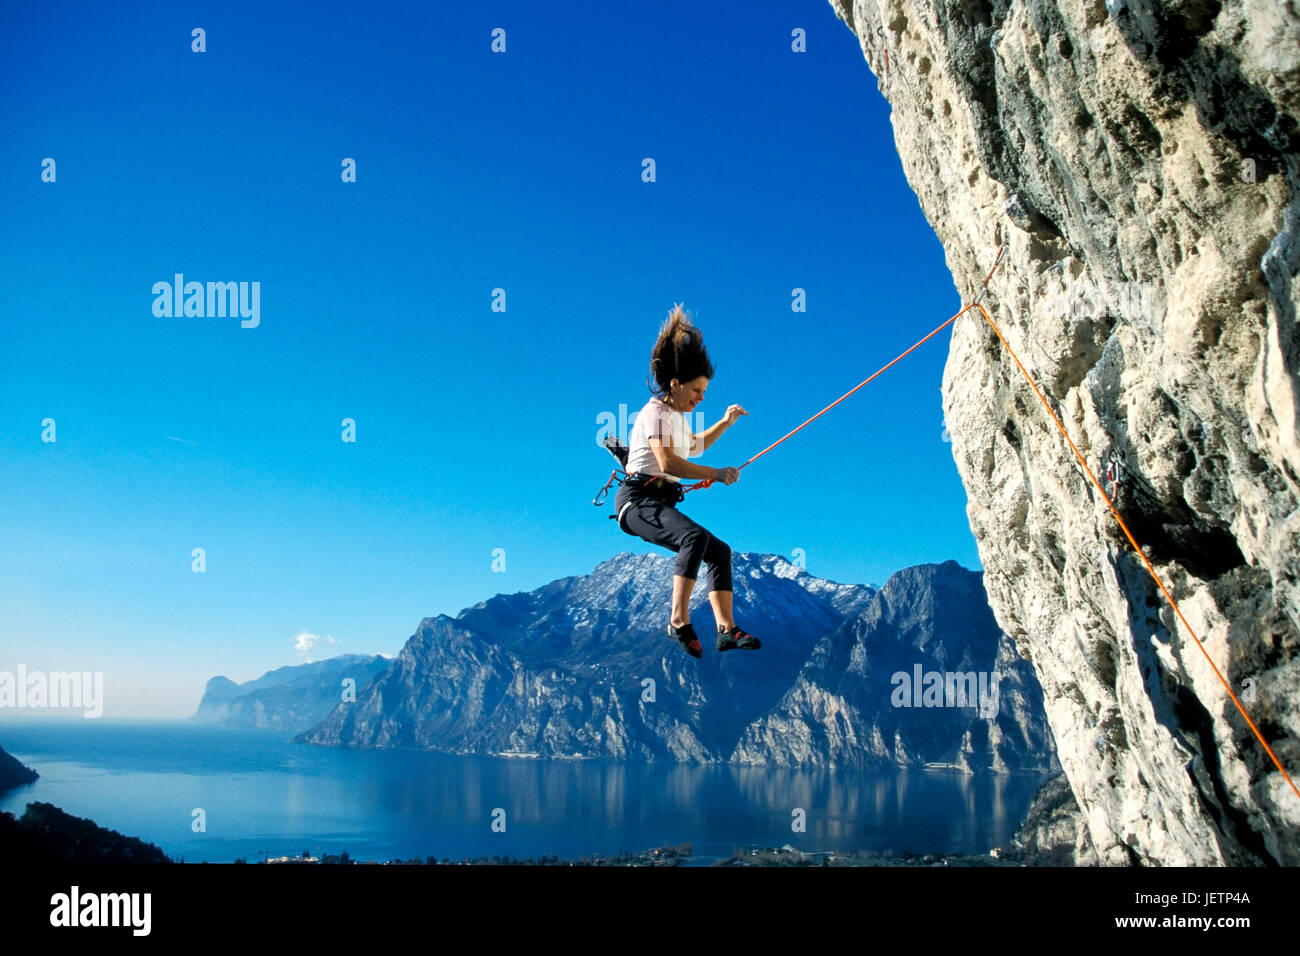 Woman climbs in the mountain, Frau klettert am Berg Stock Photo